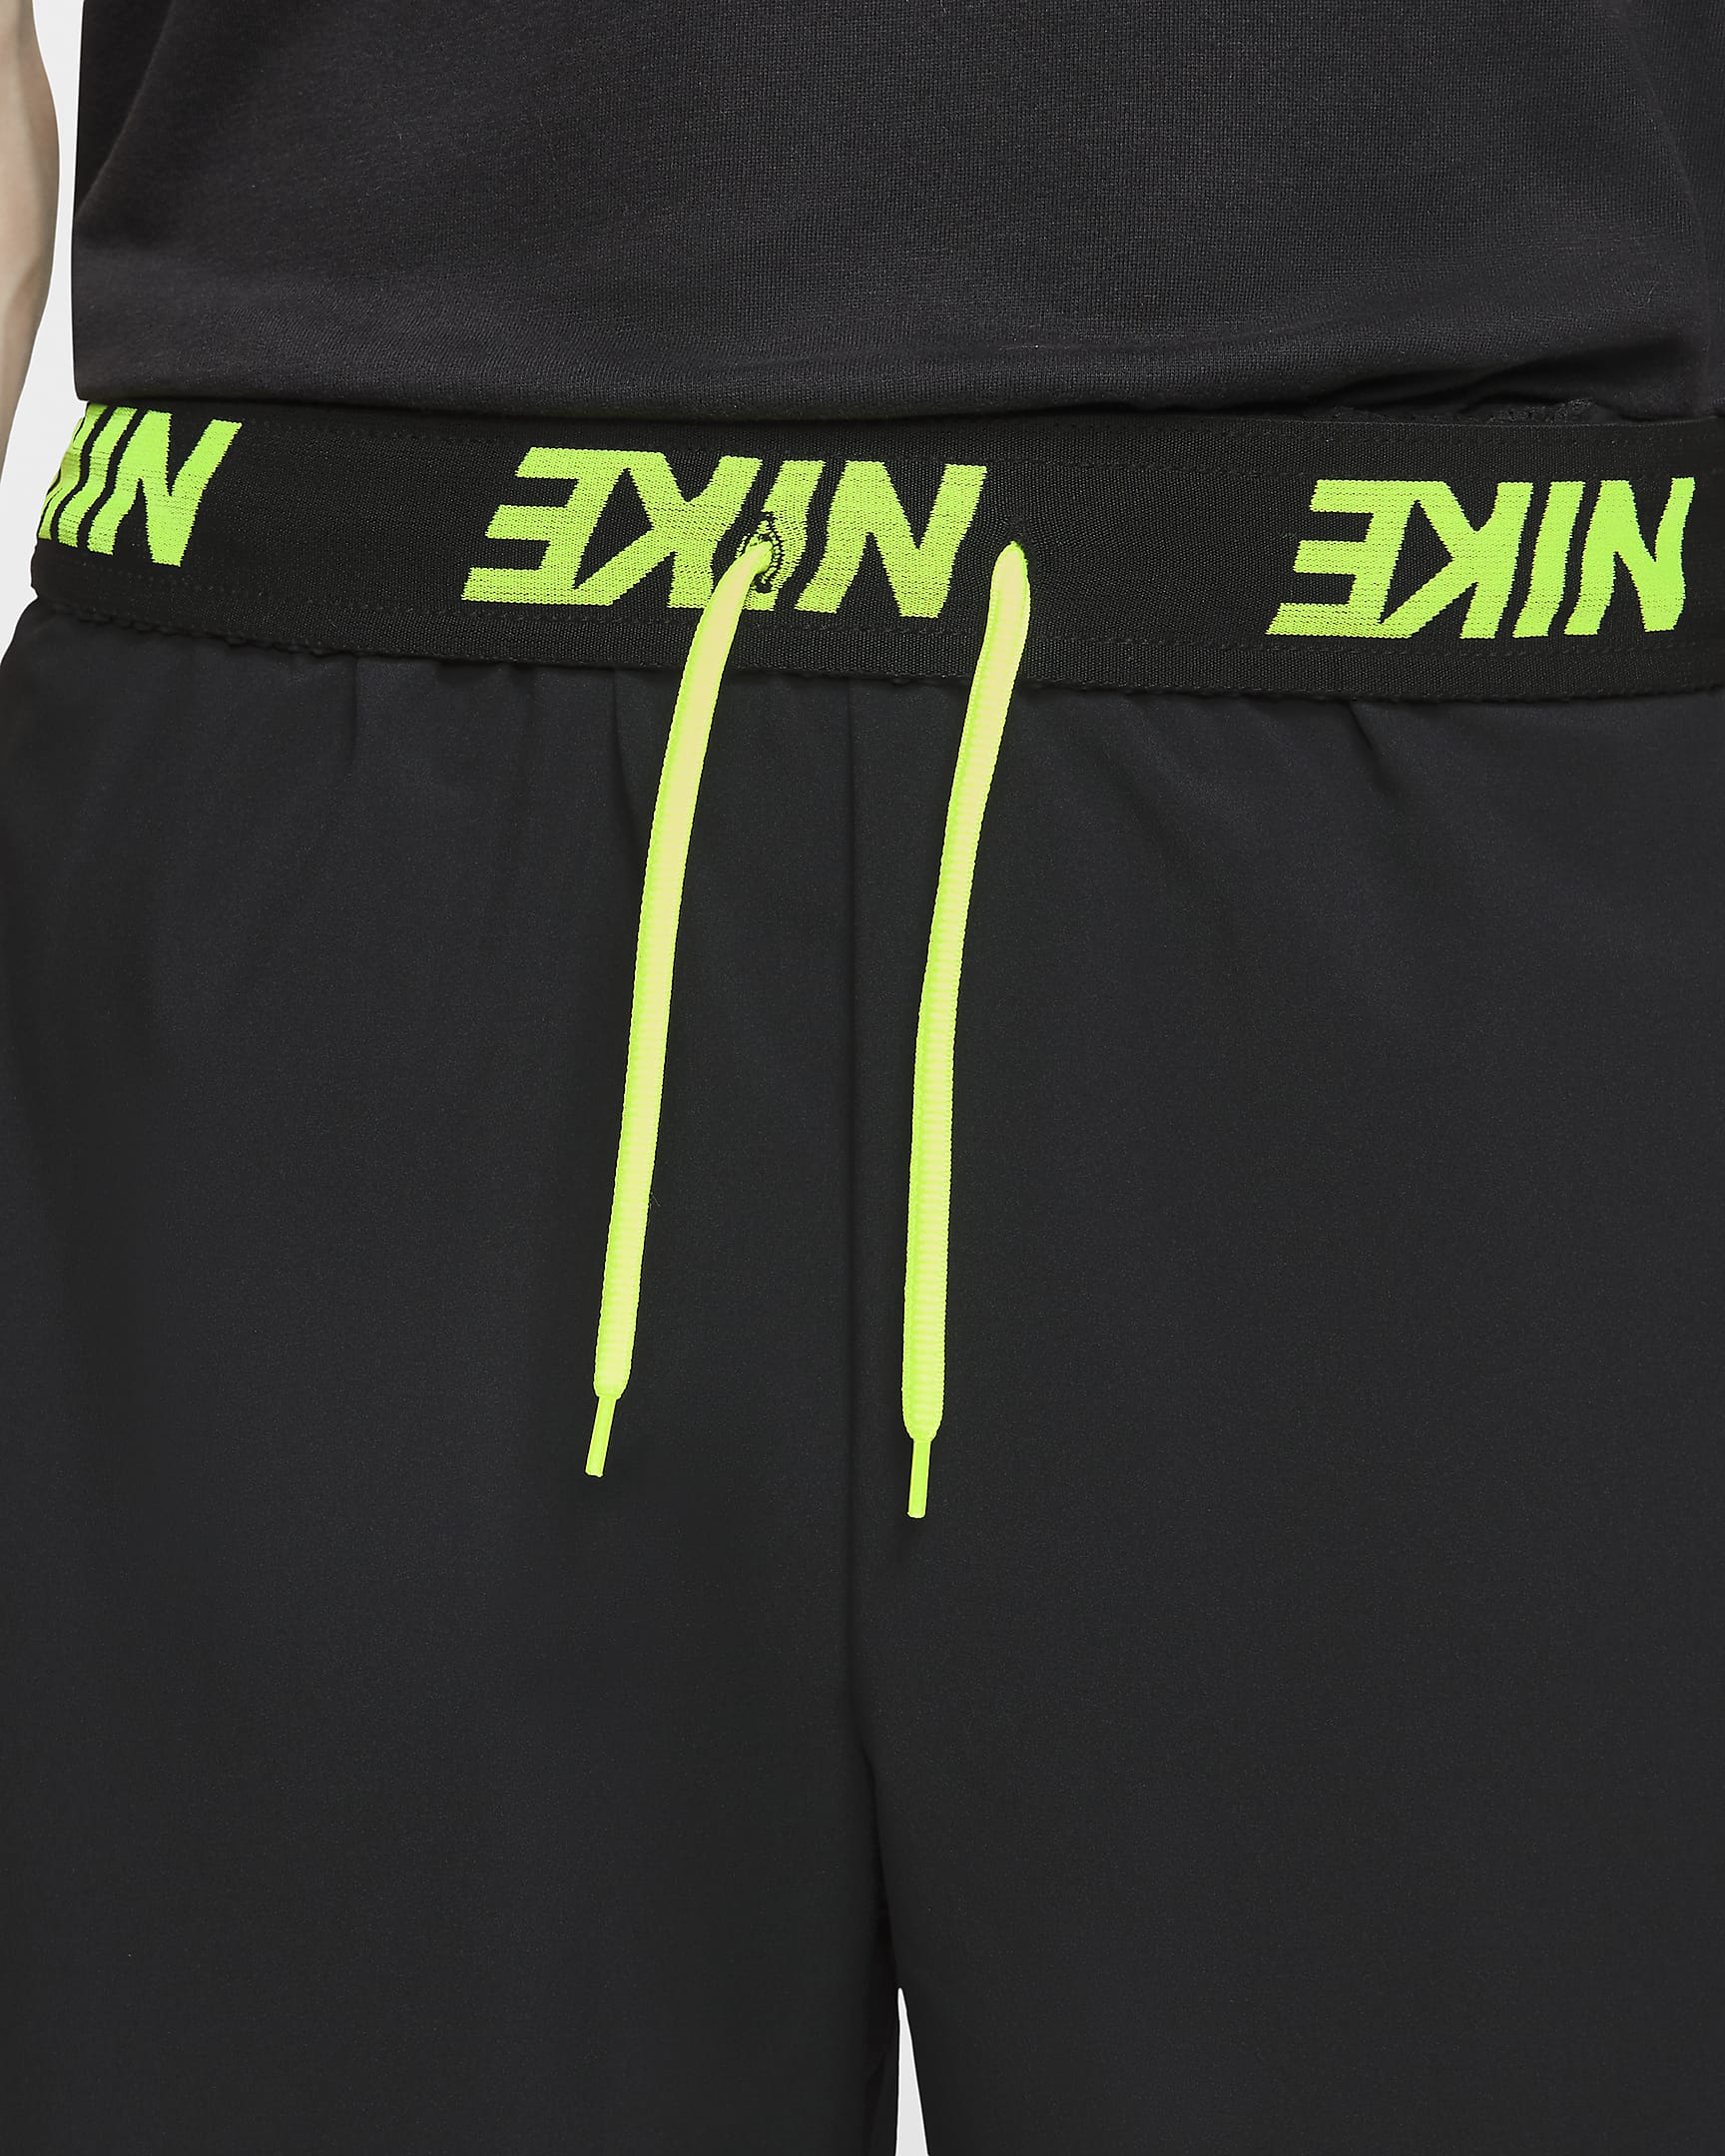 Nike Flex Men's Training Shorts - Black